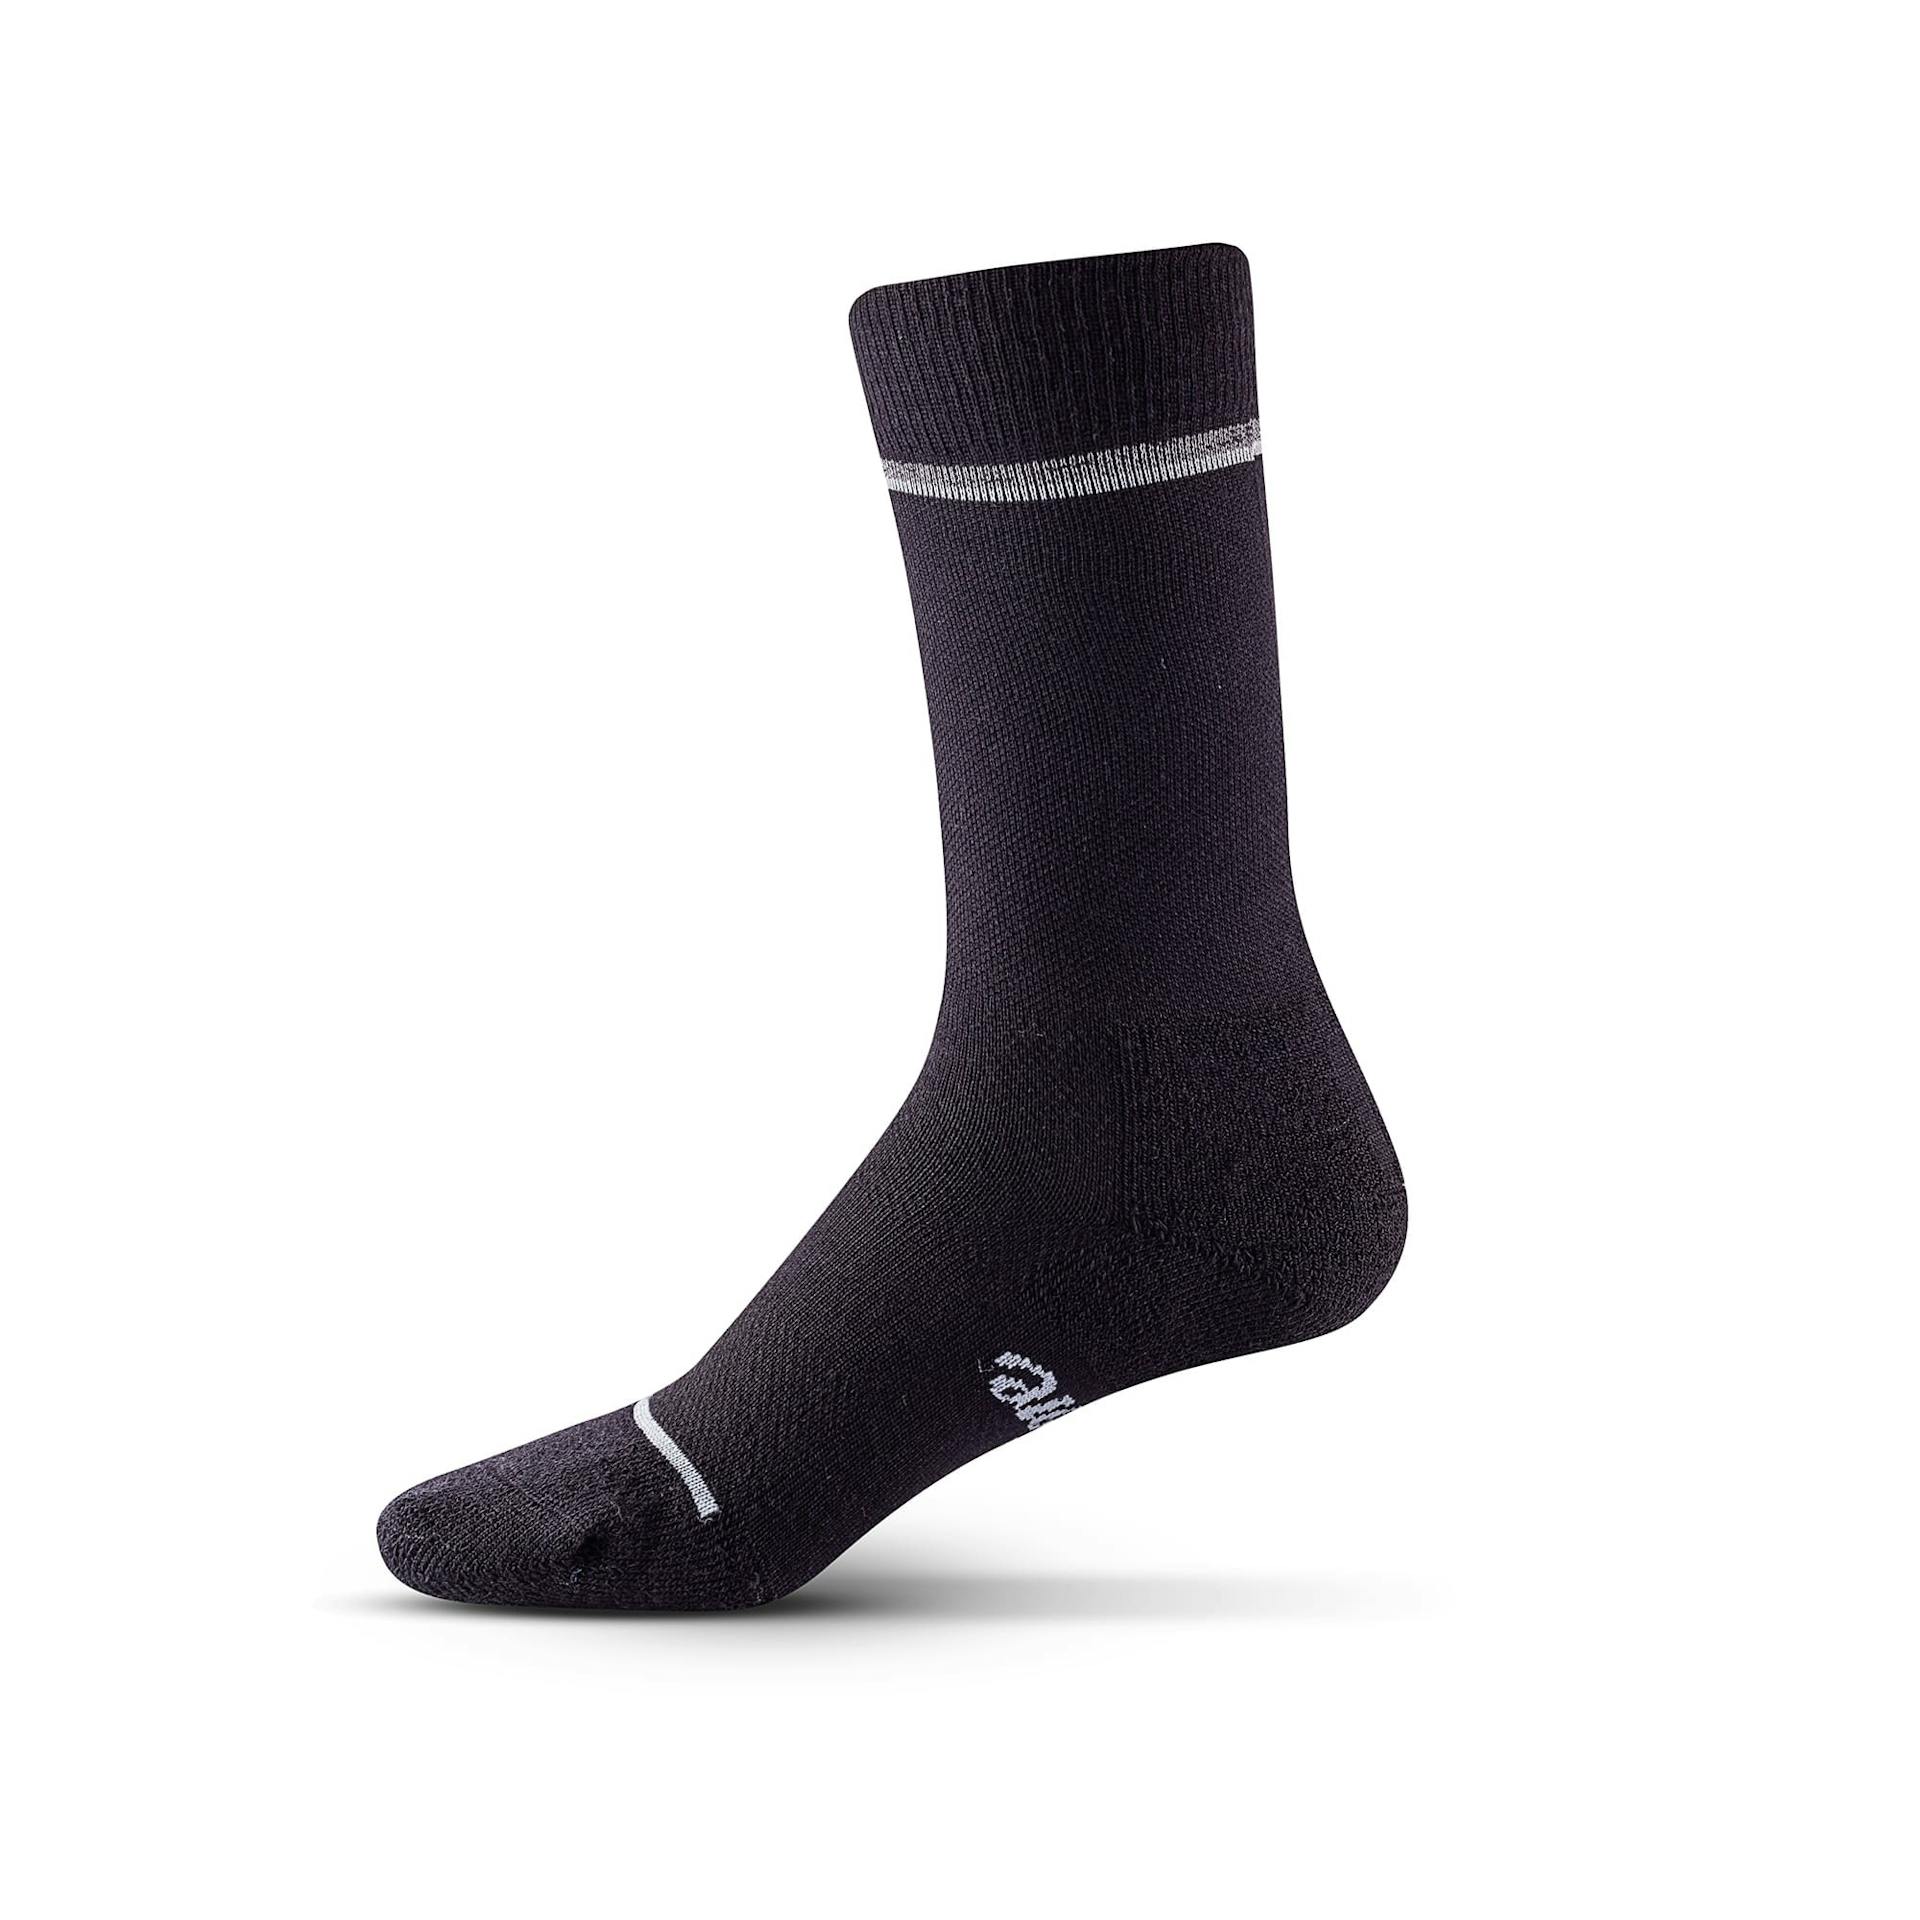 Merino Winter Socks - Black
                        